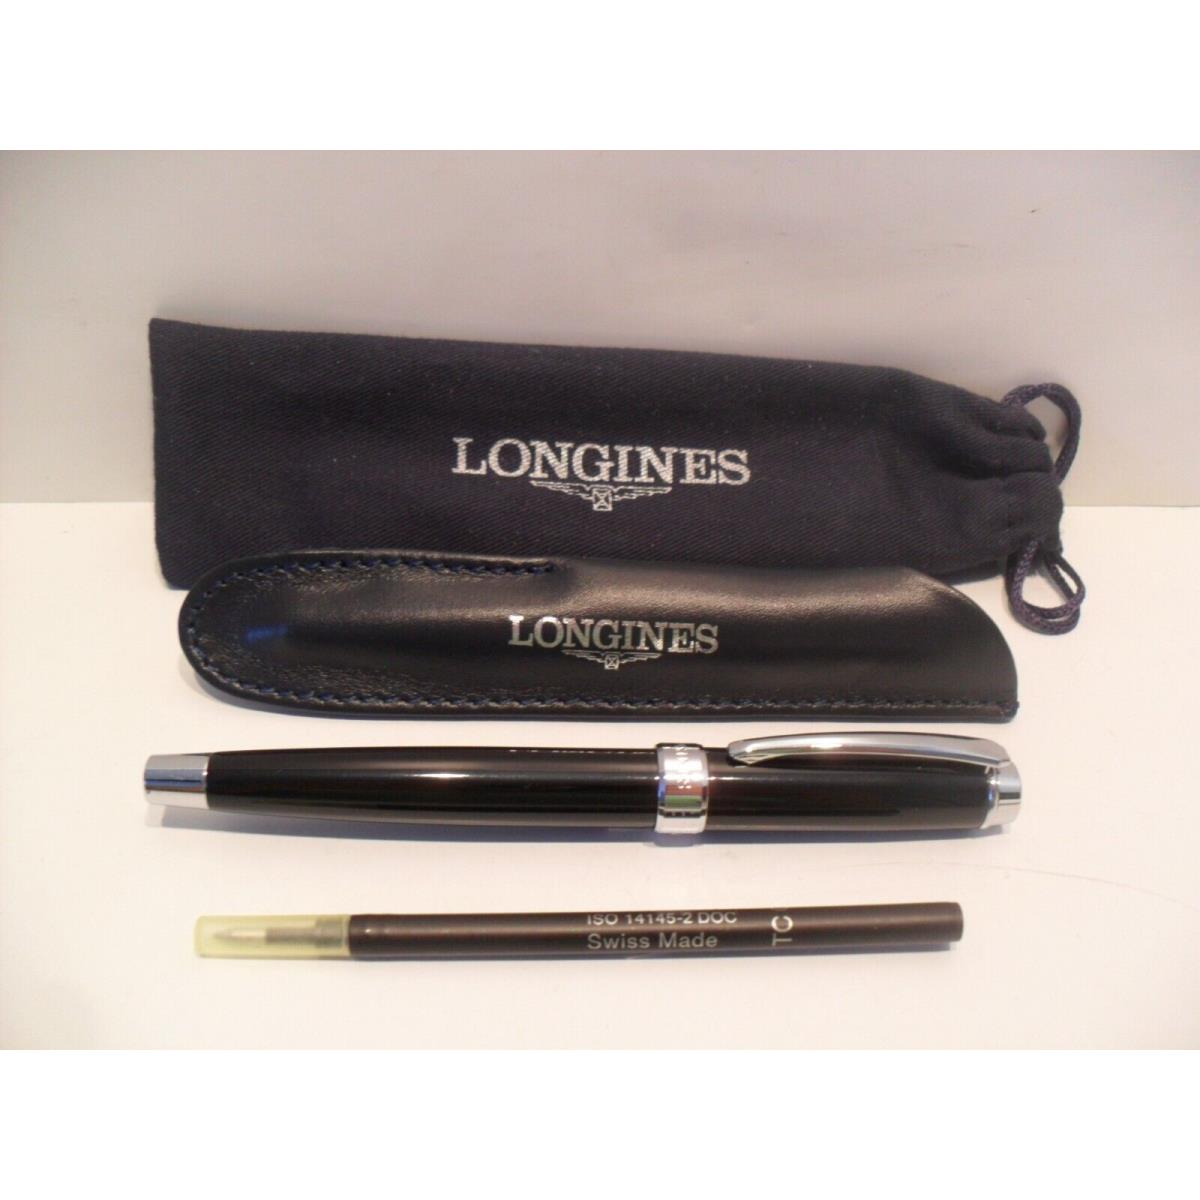 Longines Watch Pen - Stunning Black SS - - Leather Case Refill